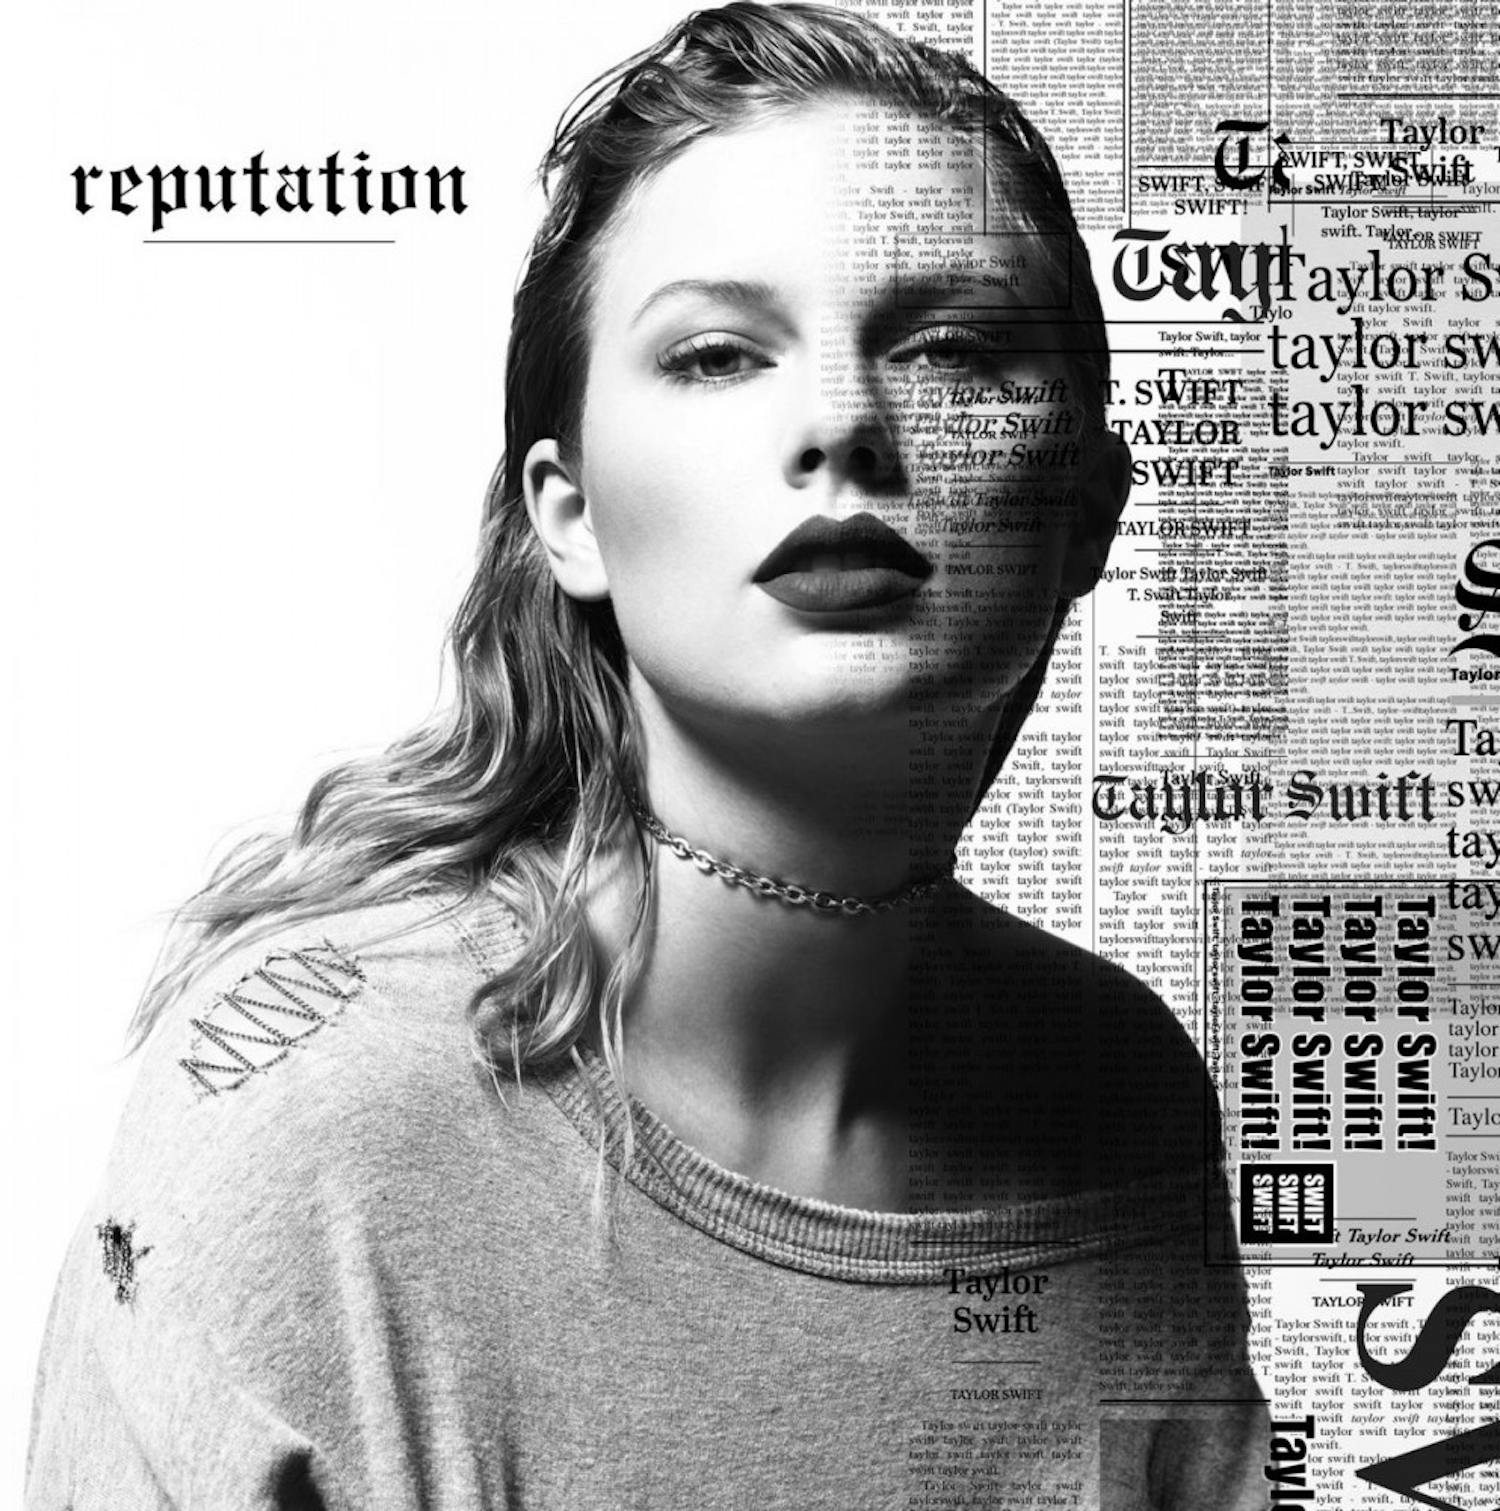 Taylor Swift announced her sixth studio album Reputation on Wednesday. (photo via @taylorswift13 on Twitter)